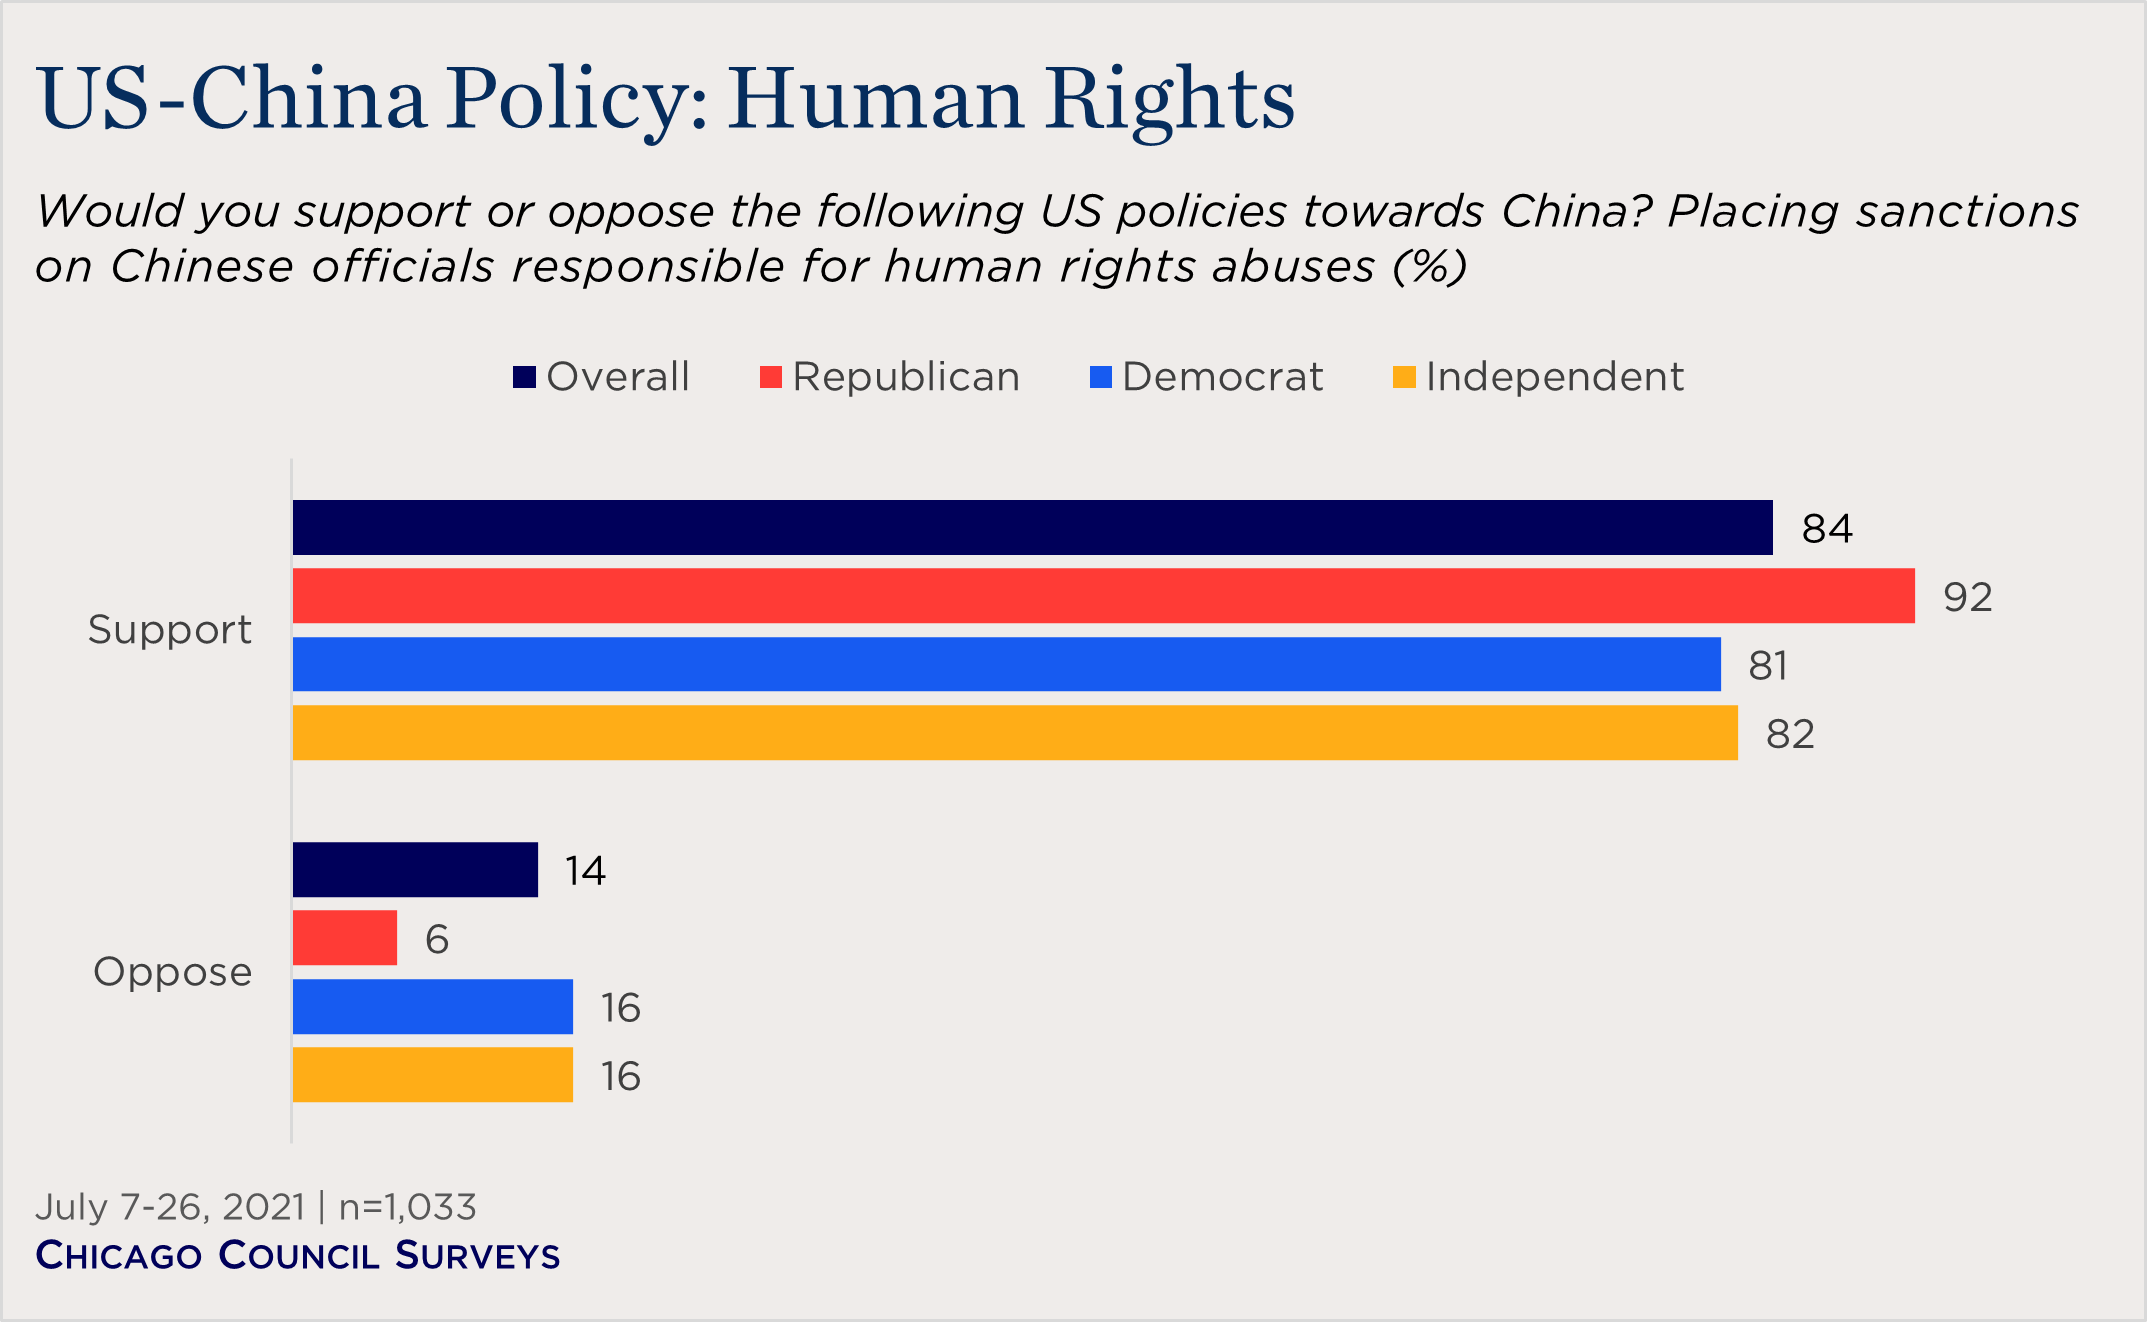 "bar chart showing partisan views on US-China policy on human rights"